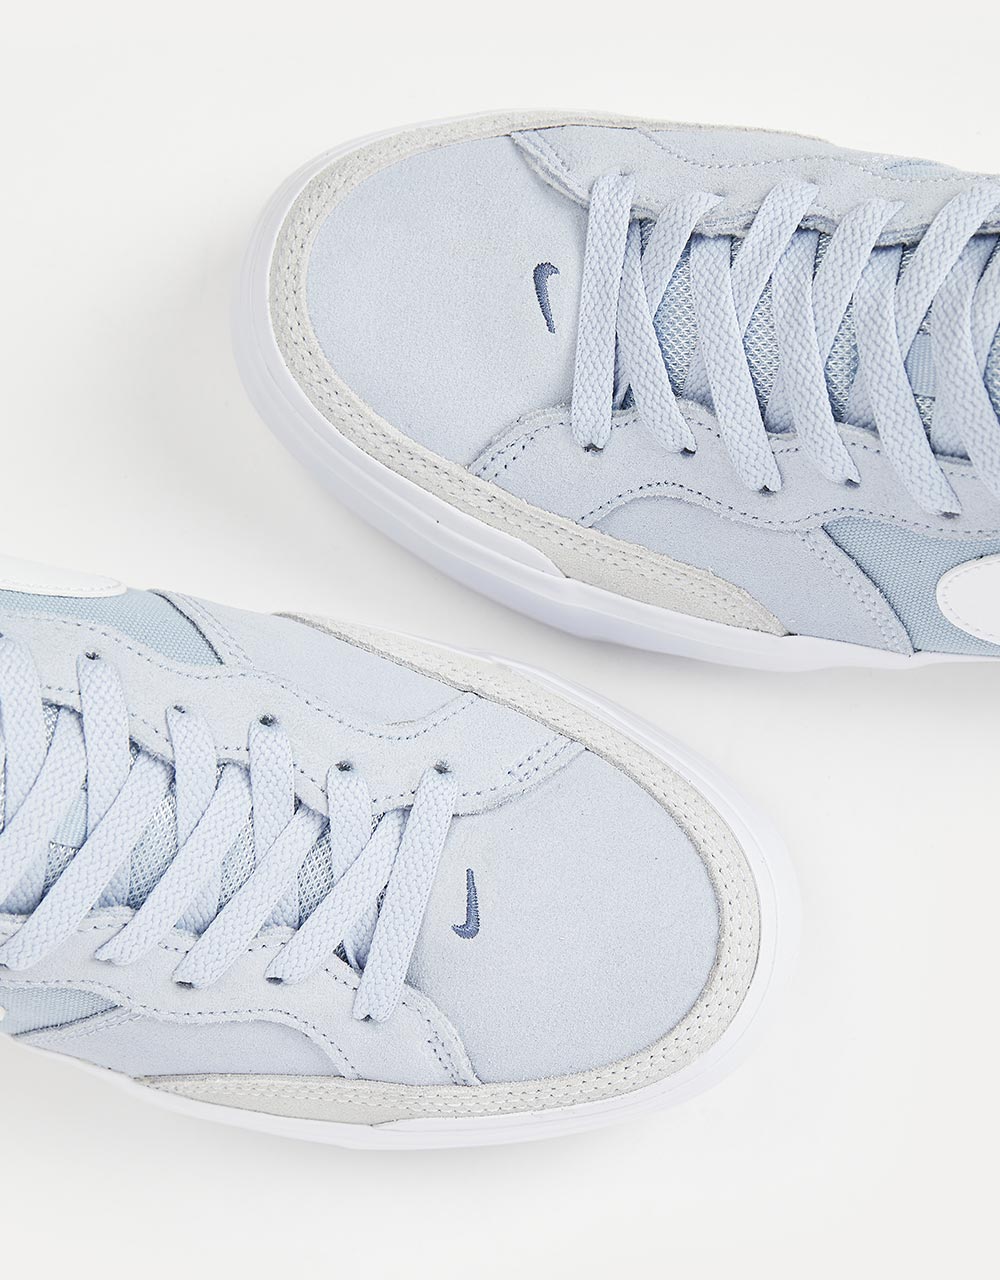 Nike SB Zoom Pogo Plus Skate Shoes - Blue Whisper/White-Football Grey